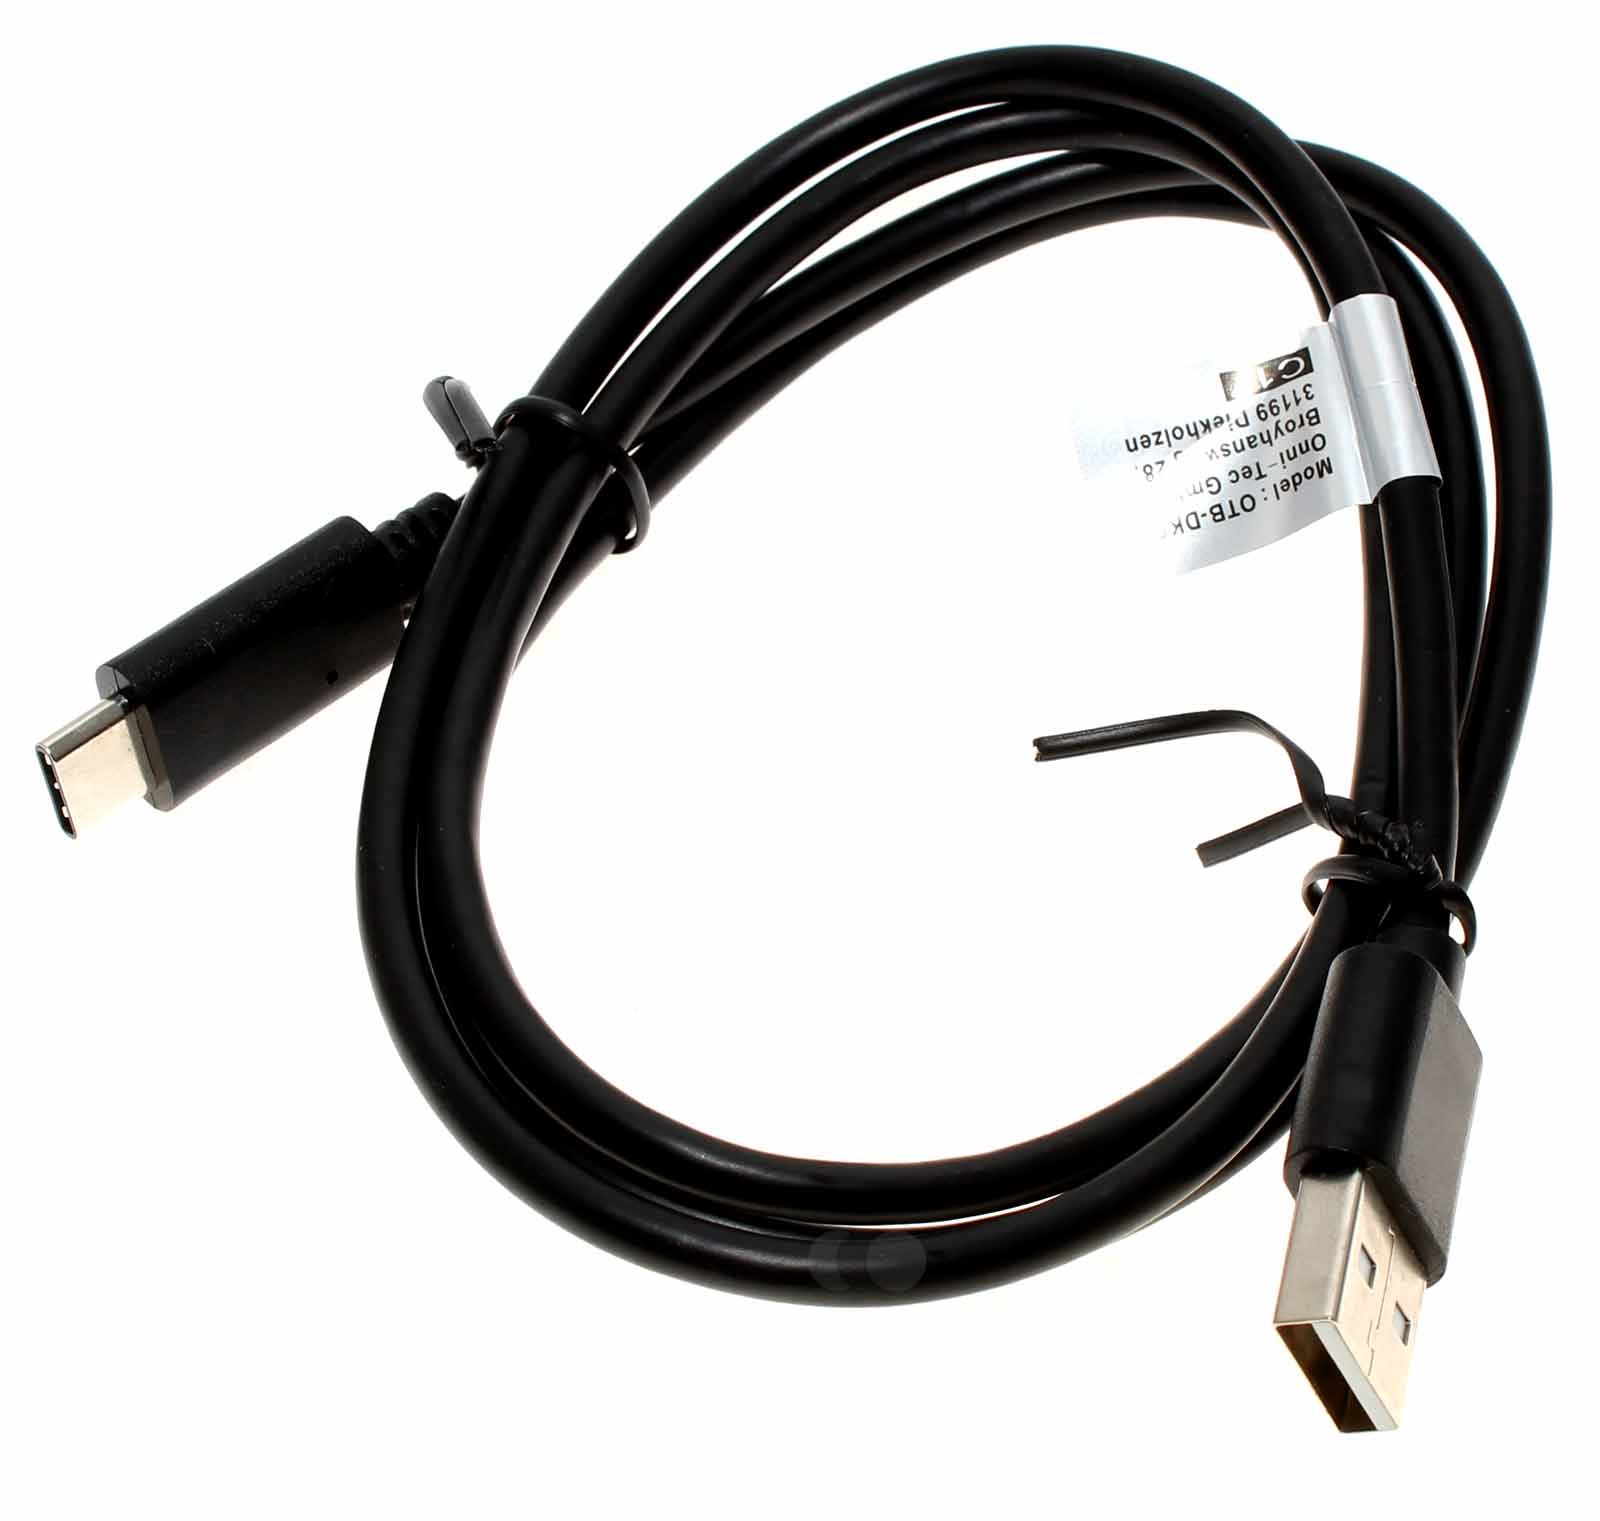 1m USB 3.0 Lade- Datenkabel | USB Type C (USB-C) Stecker auf USB A (USB-A 2.0) Stecker, für Handy, Tablet, Laptop